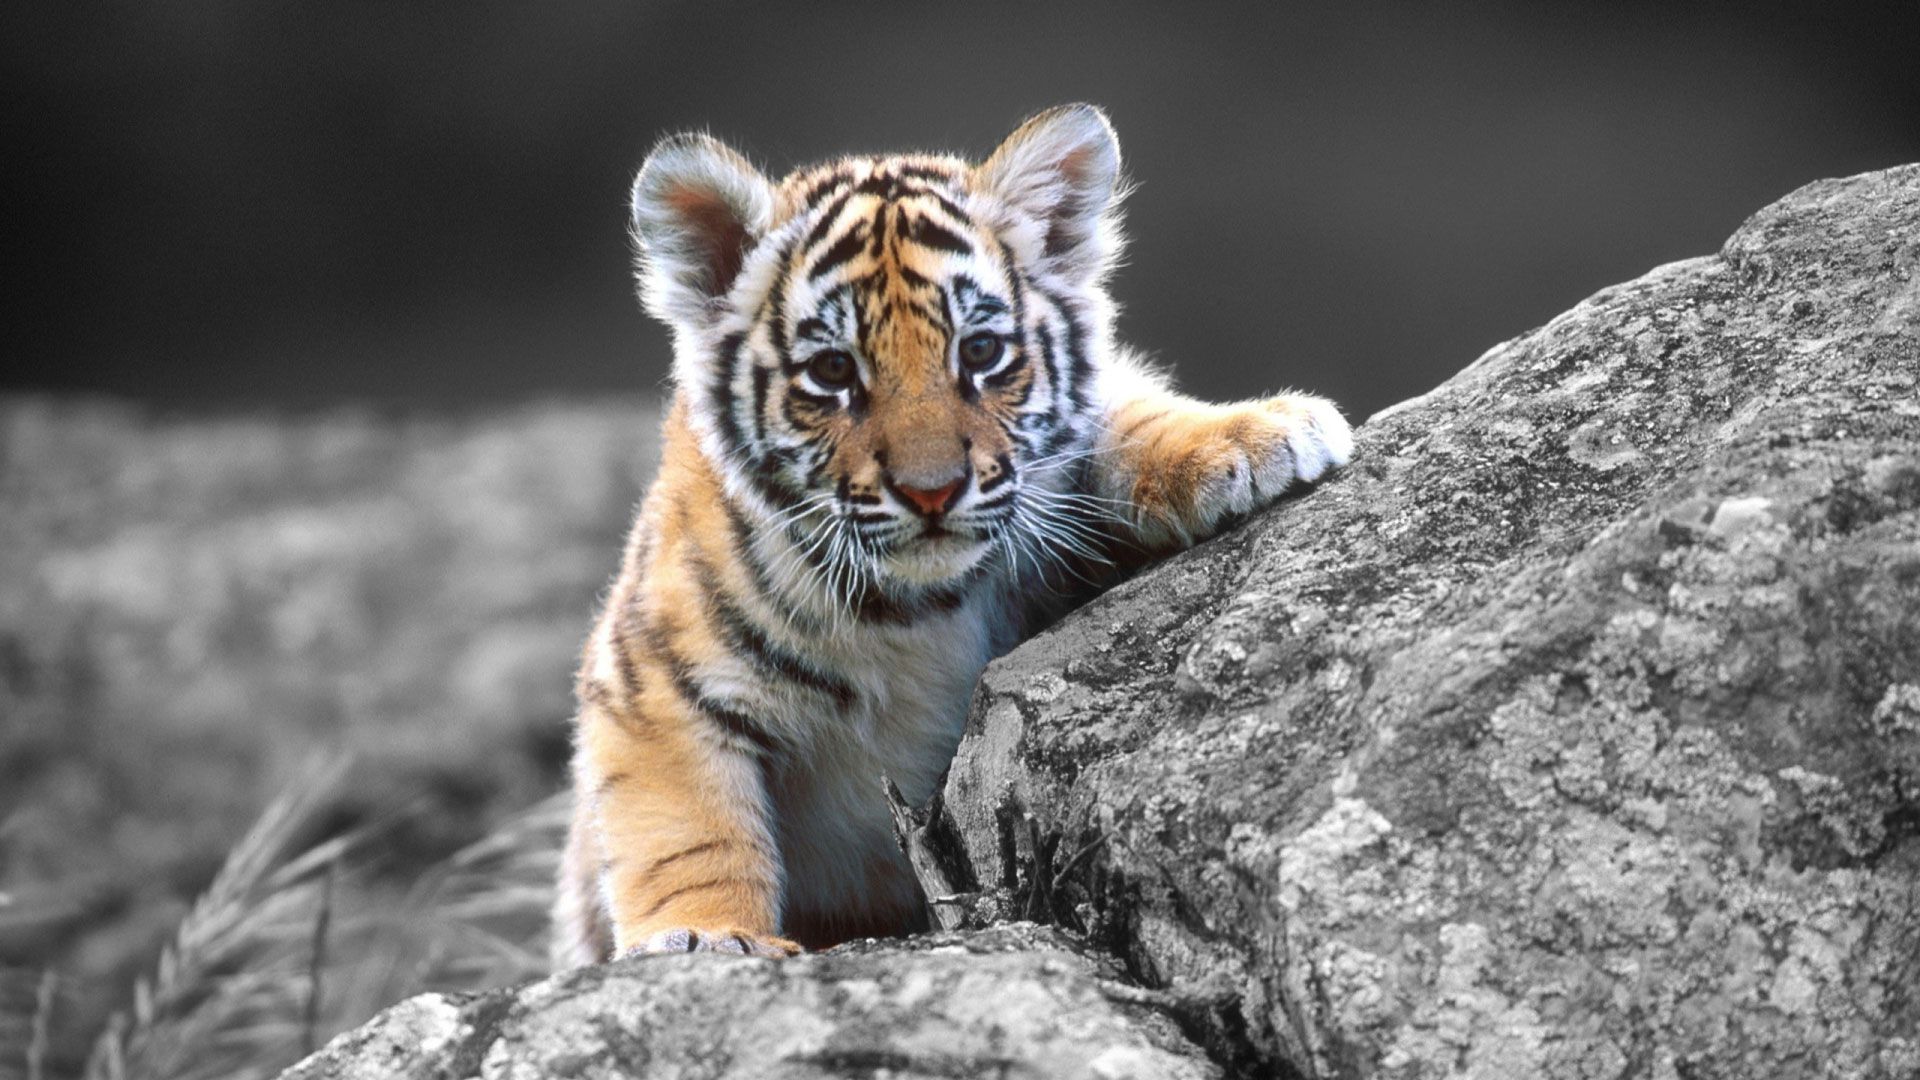 Tiger desktop wallpaper hd